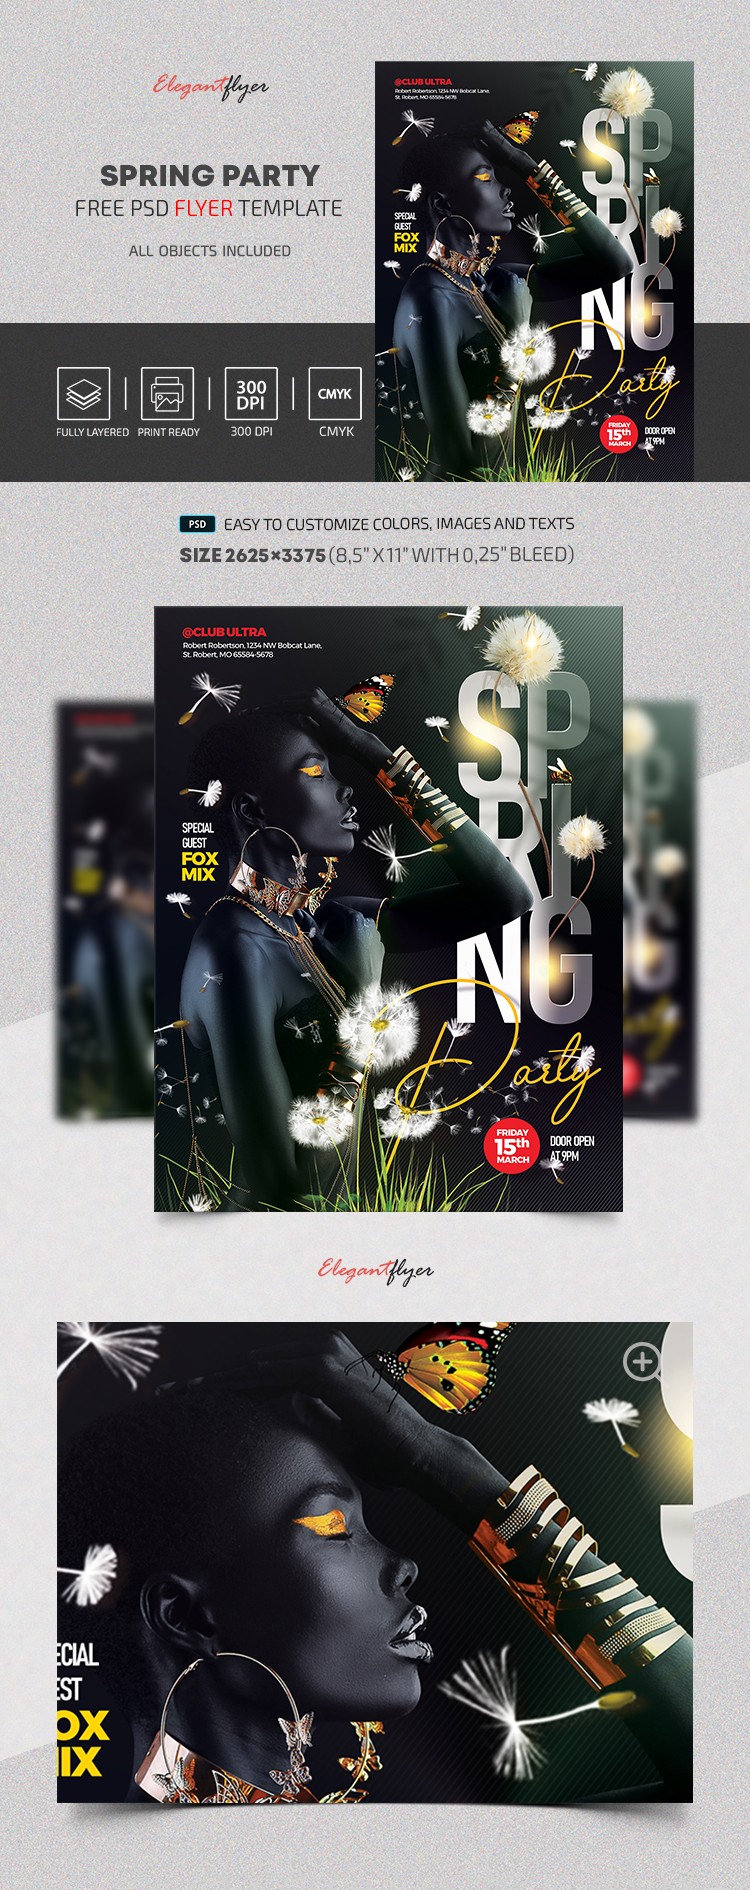 Spring Party Flyer by ElegantFlyer